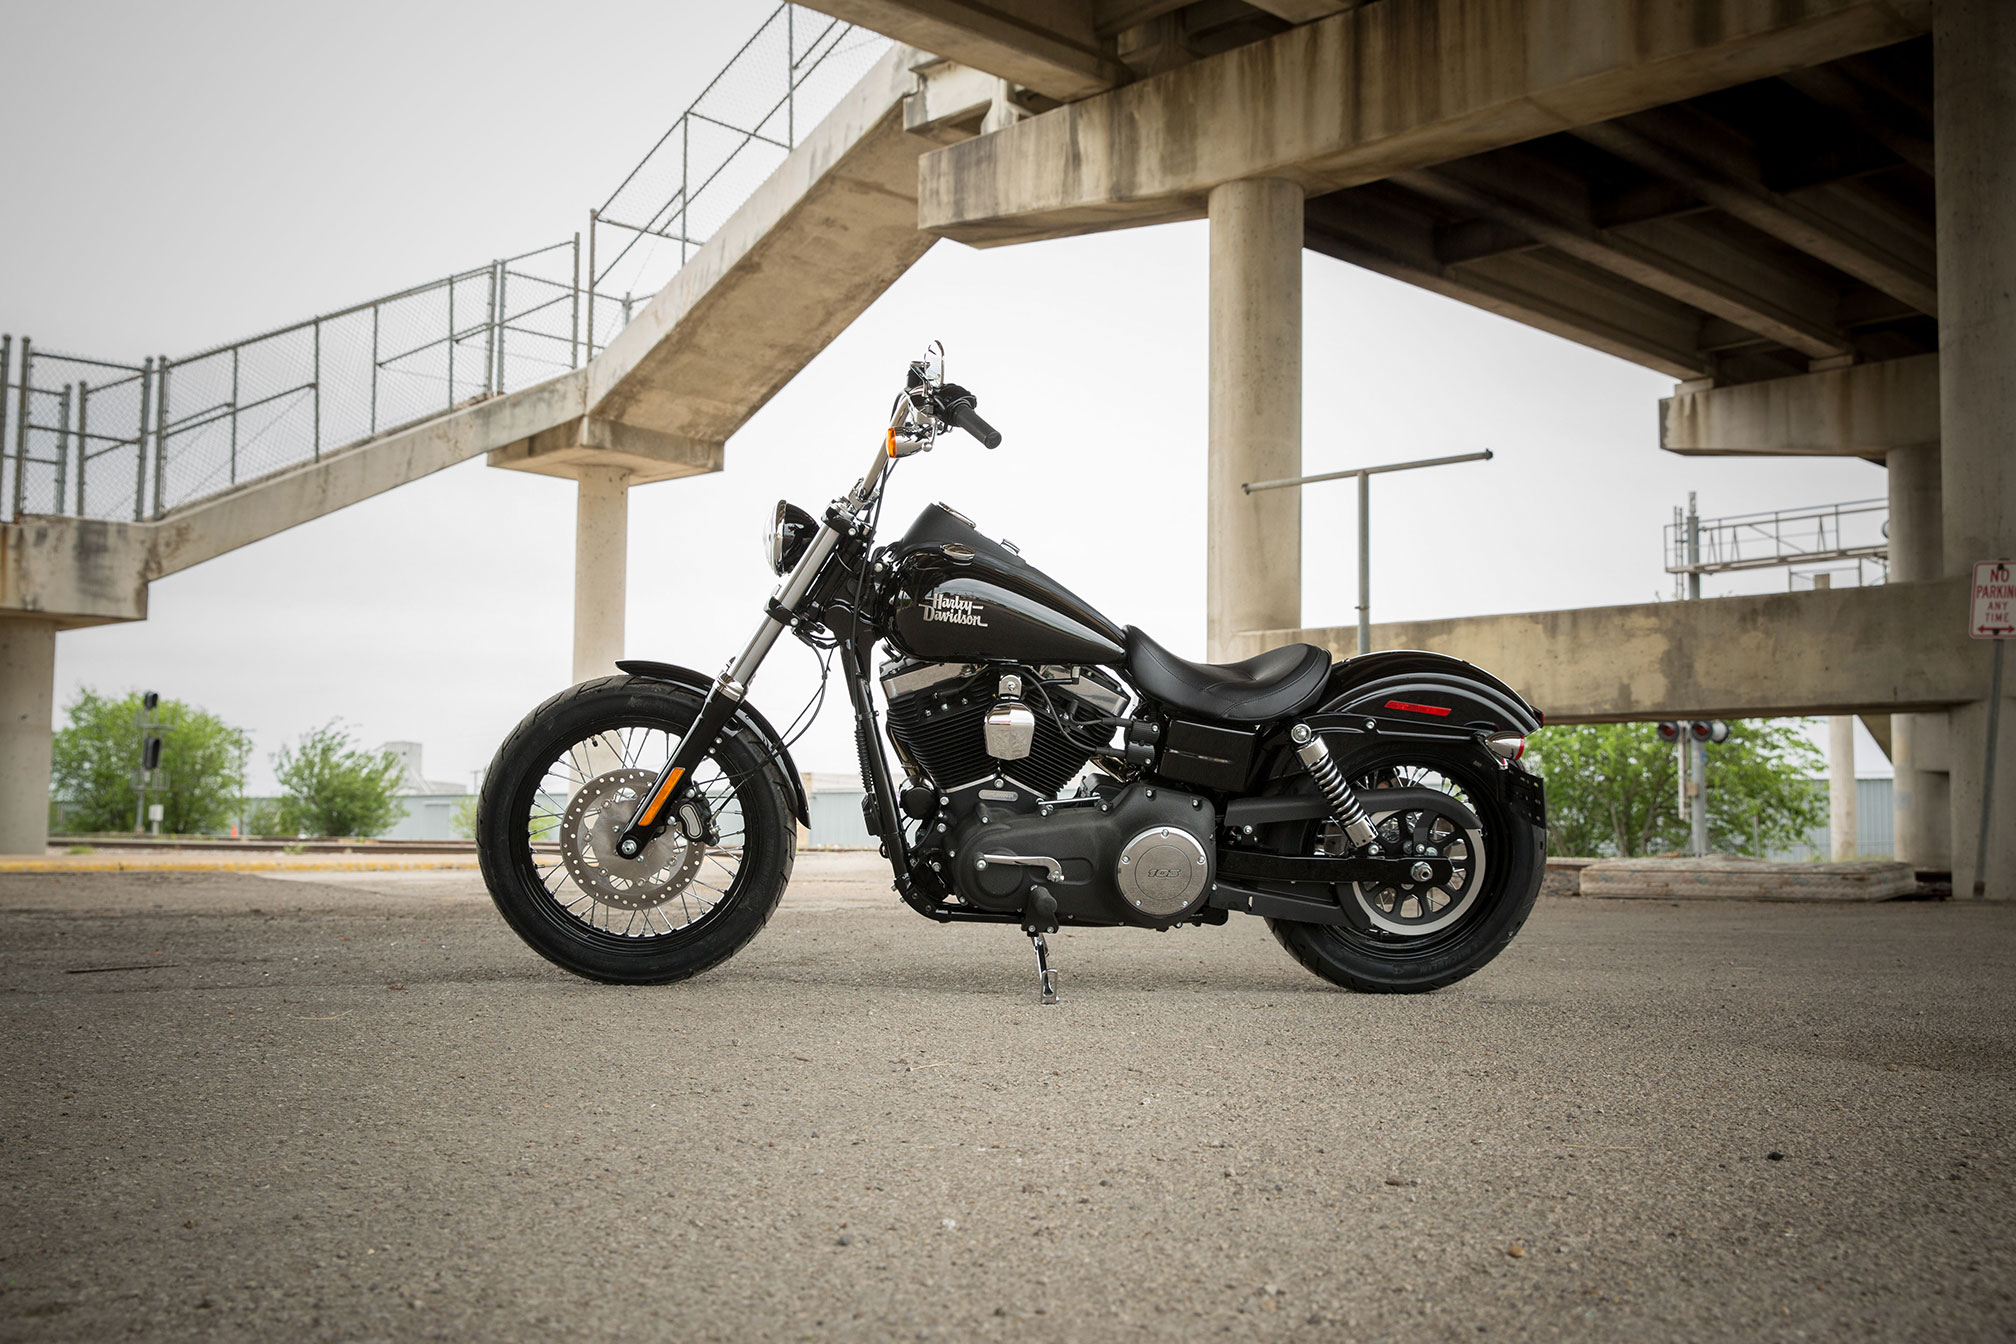 2016 Harley Davidson Dyna Street Bob Review